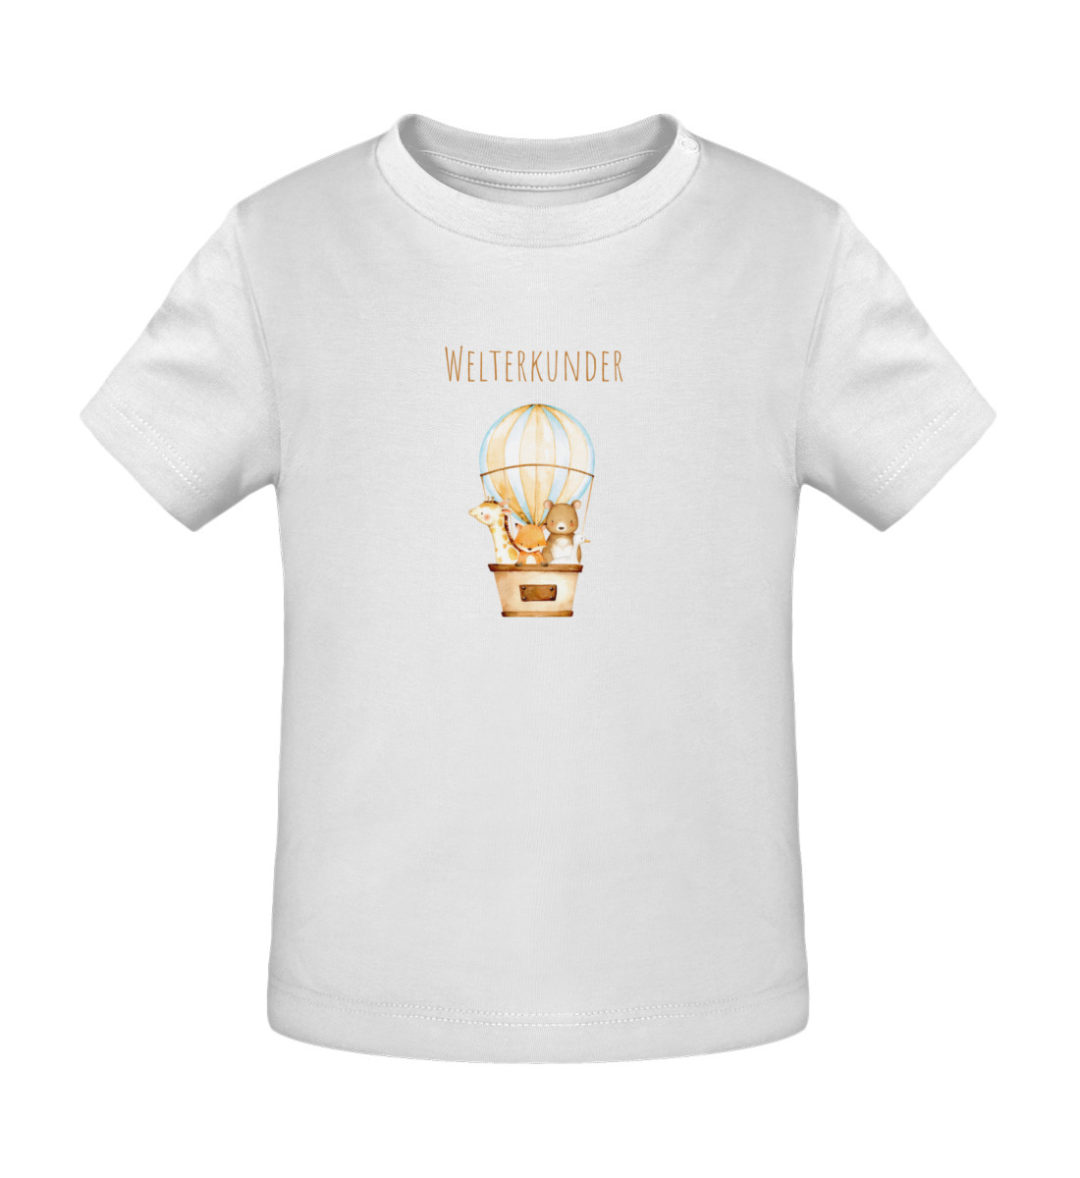 Welterkunder - Baby Creator T-Shirt ST/ST-3